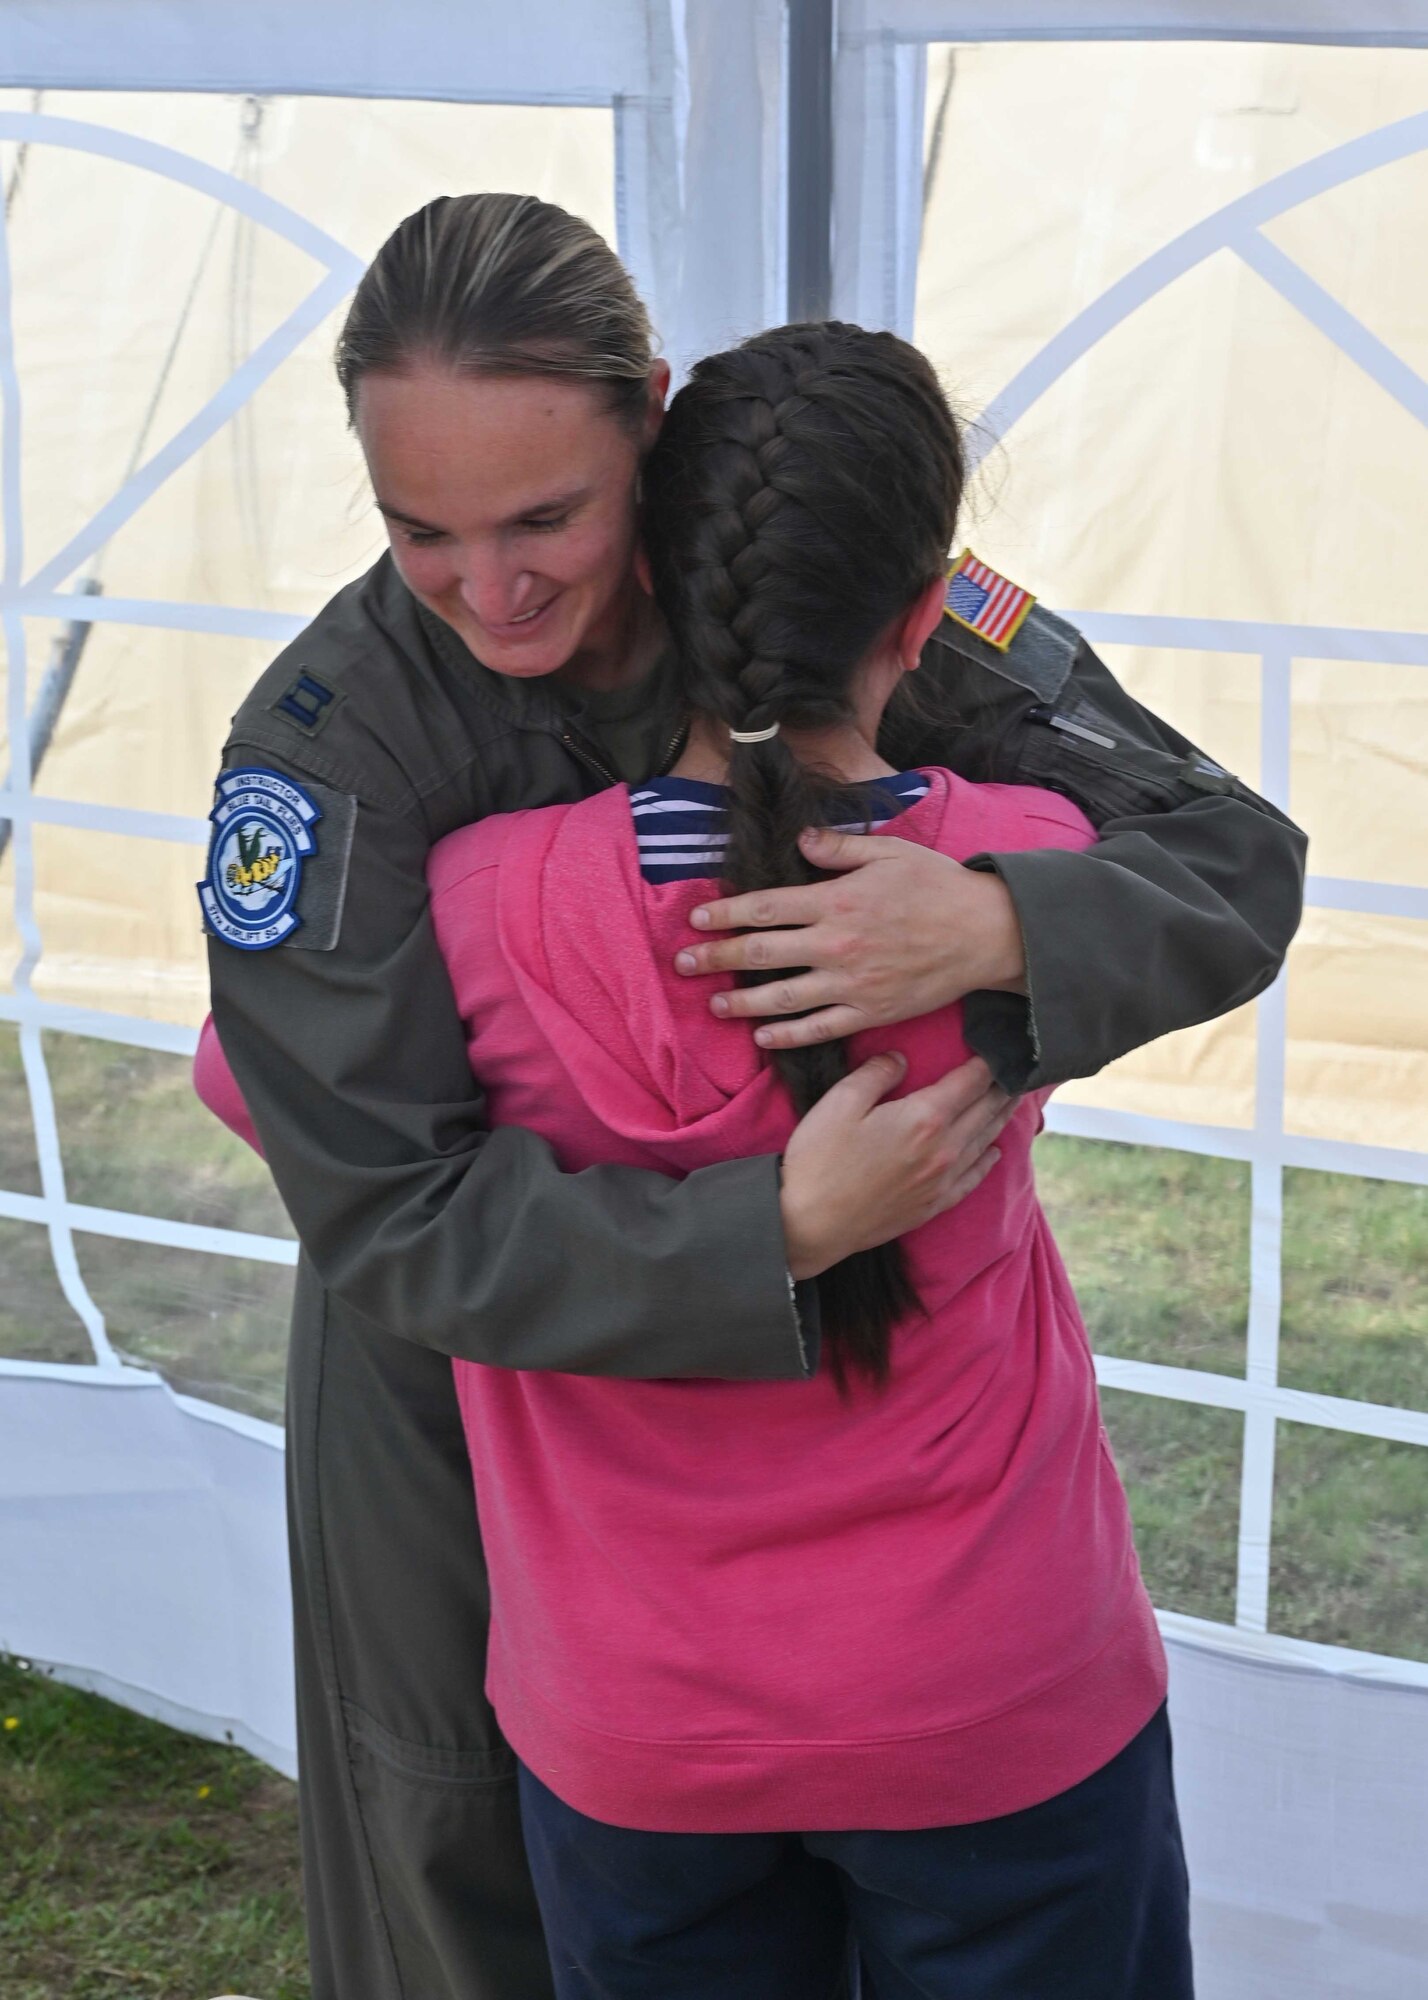 Pilot hugging young girl.